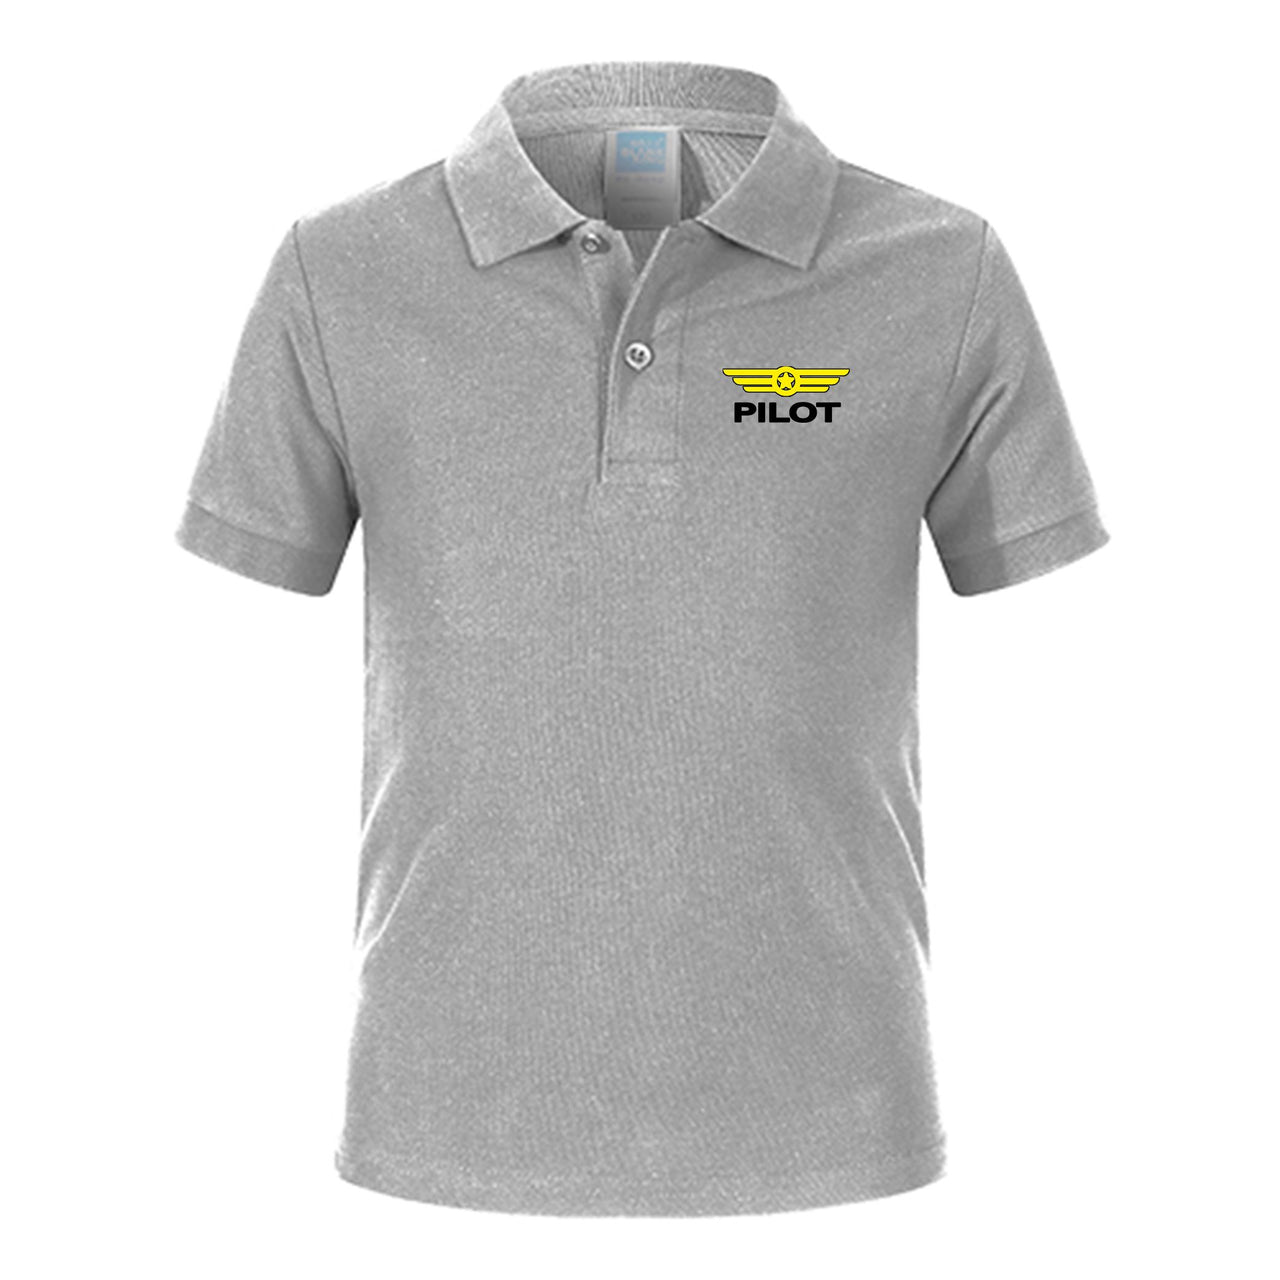 Pilot & Badge Designed Children Polo T-Shirts